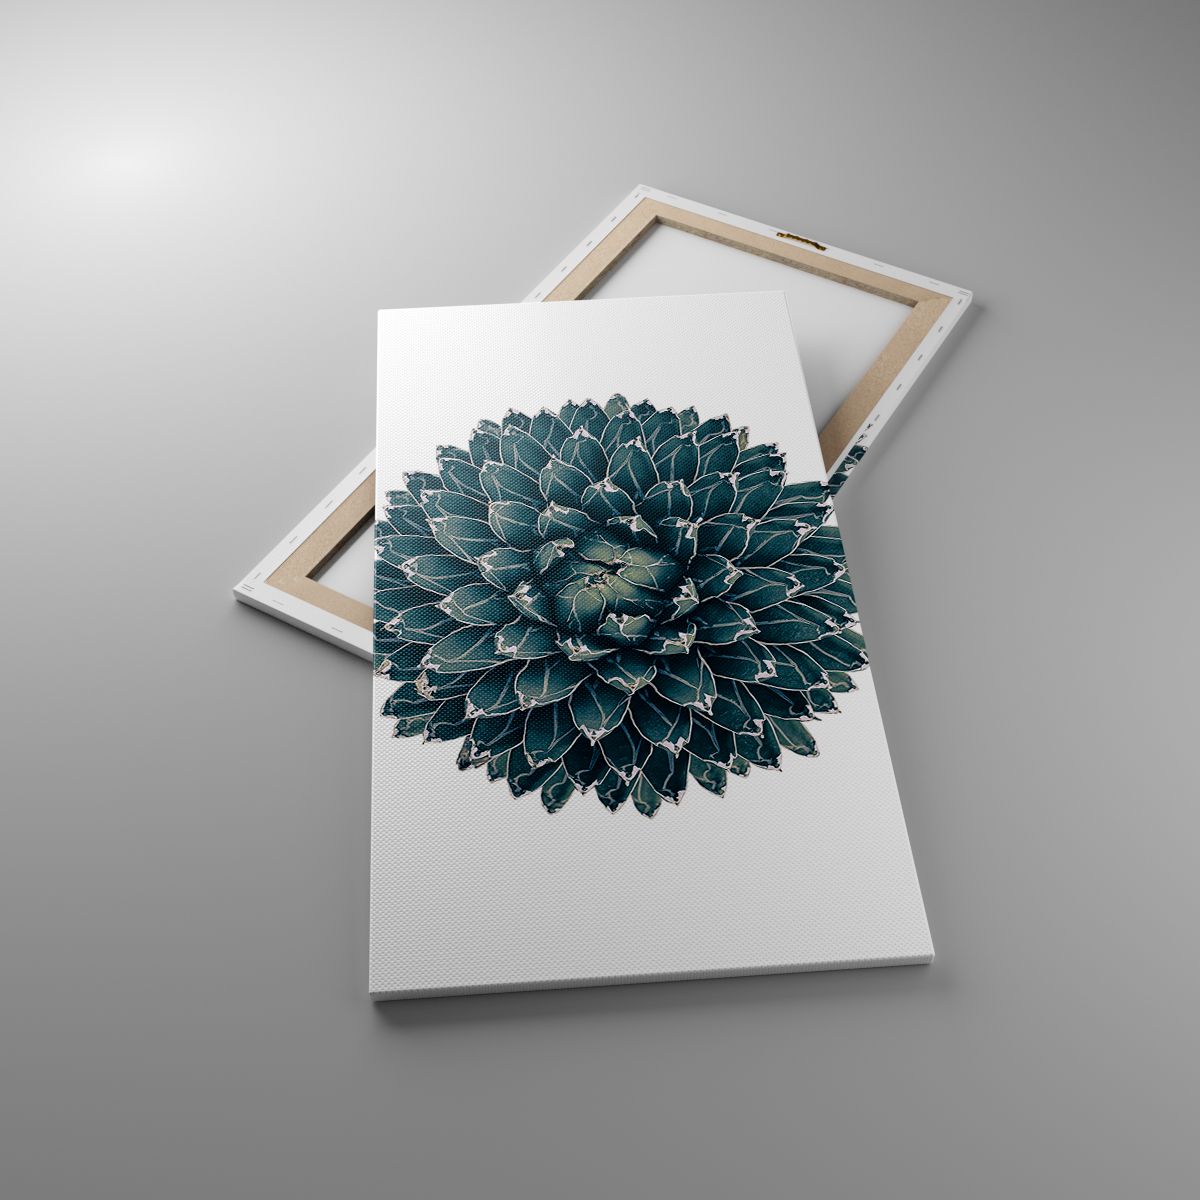 Obrazy Kaktus, Obrazy Agawa, Obrazy Grafika, Obrazy Kwiaty, Obrazy Botanika